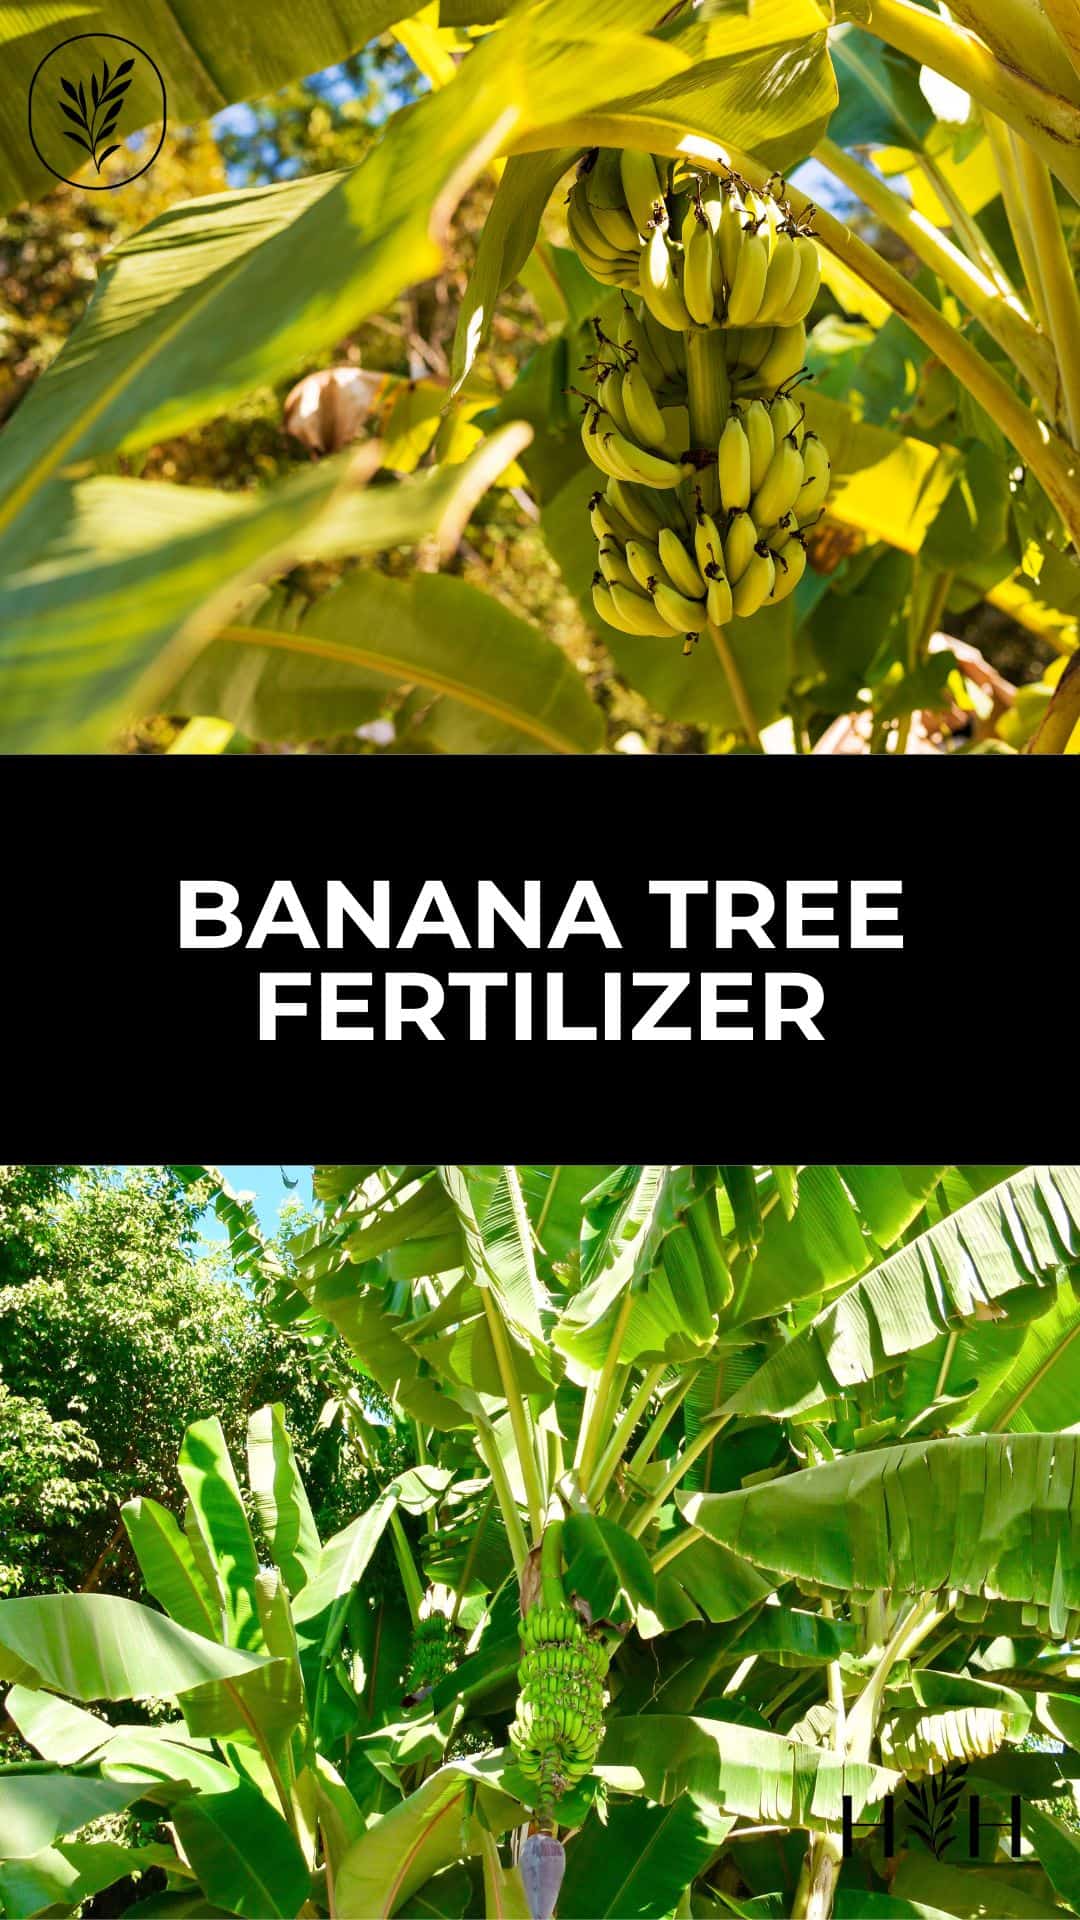 Banana tree fertilizer via @home4theharvest